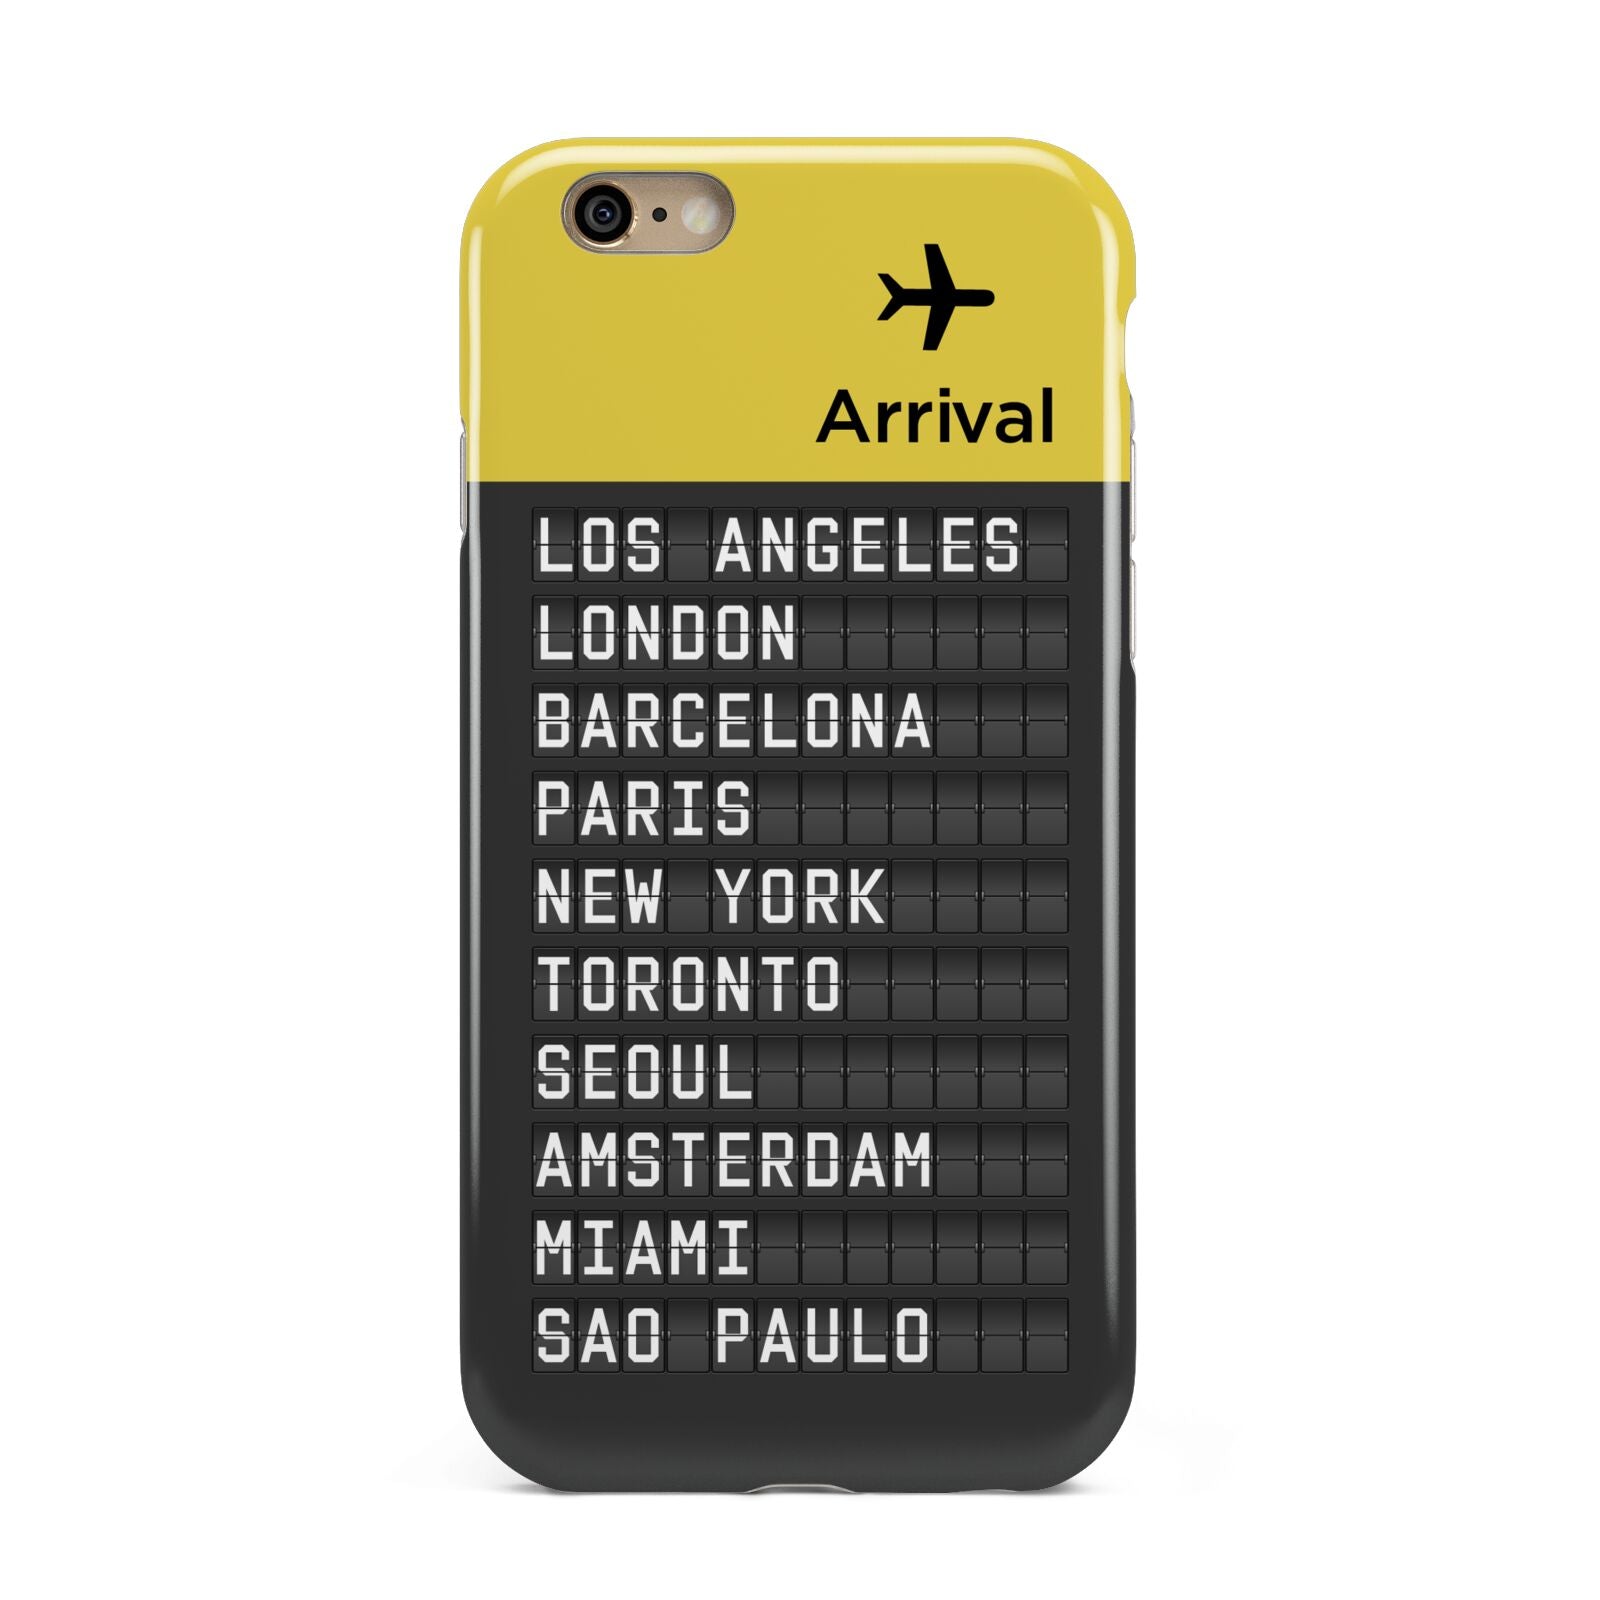 Airport Arrivals Board Apple iPhone 6 3D Tough Case